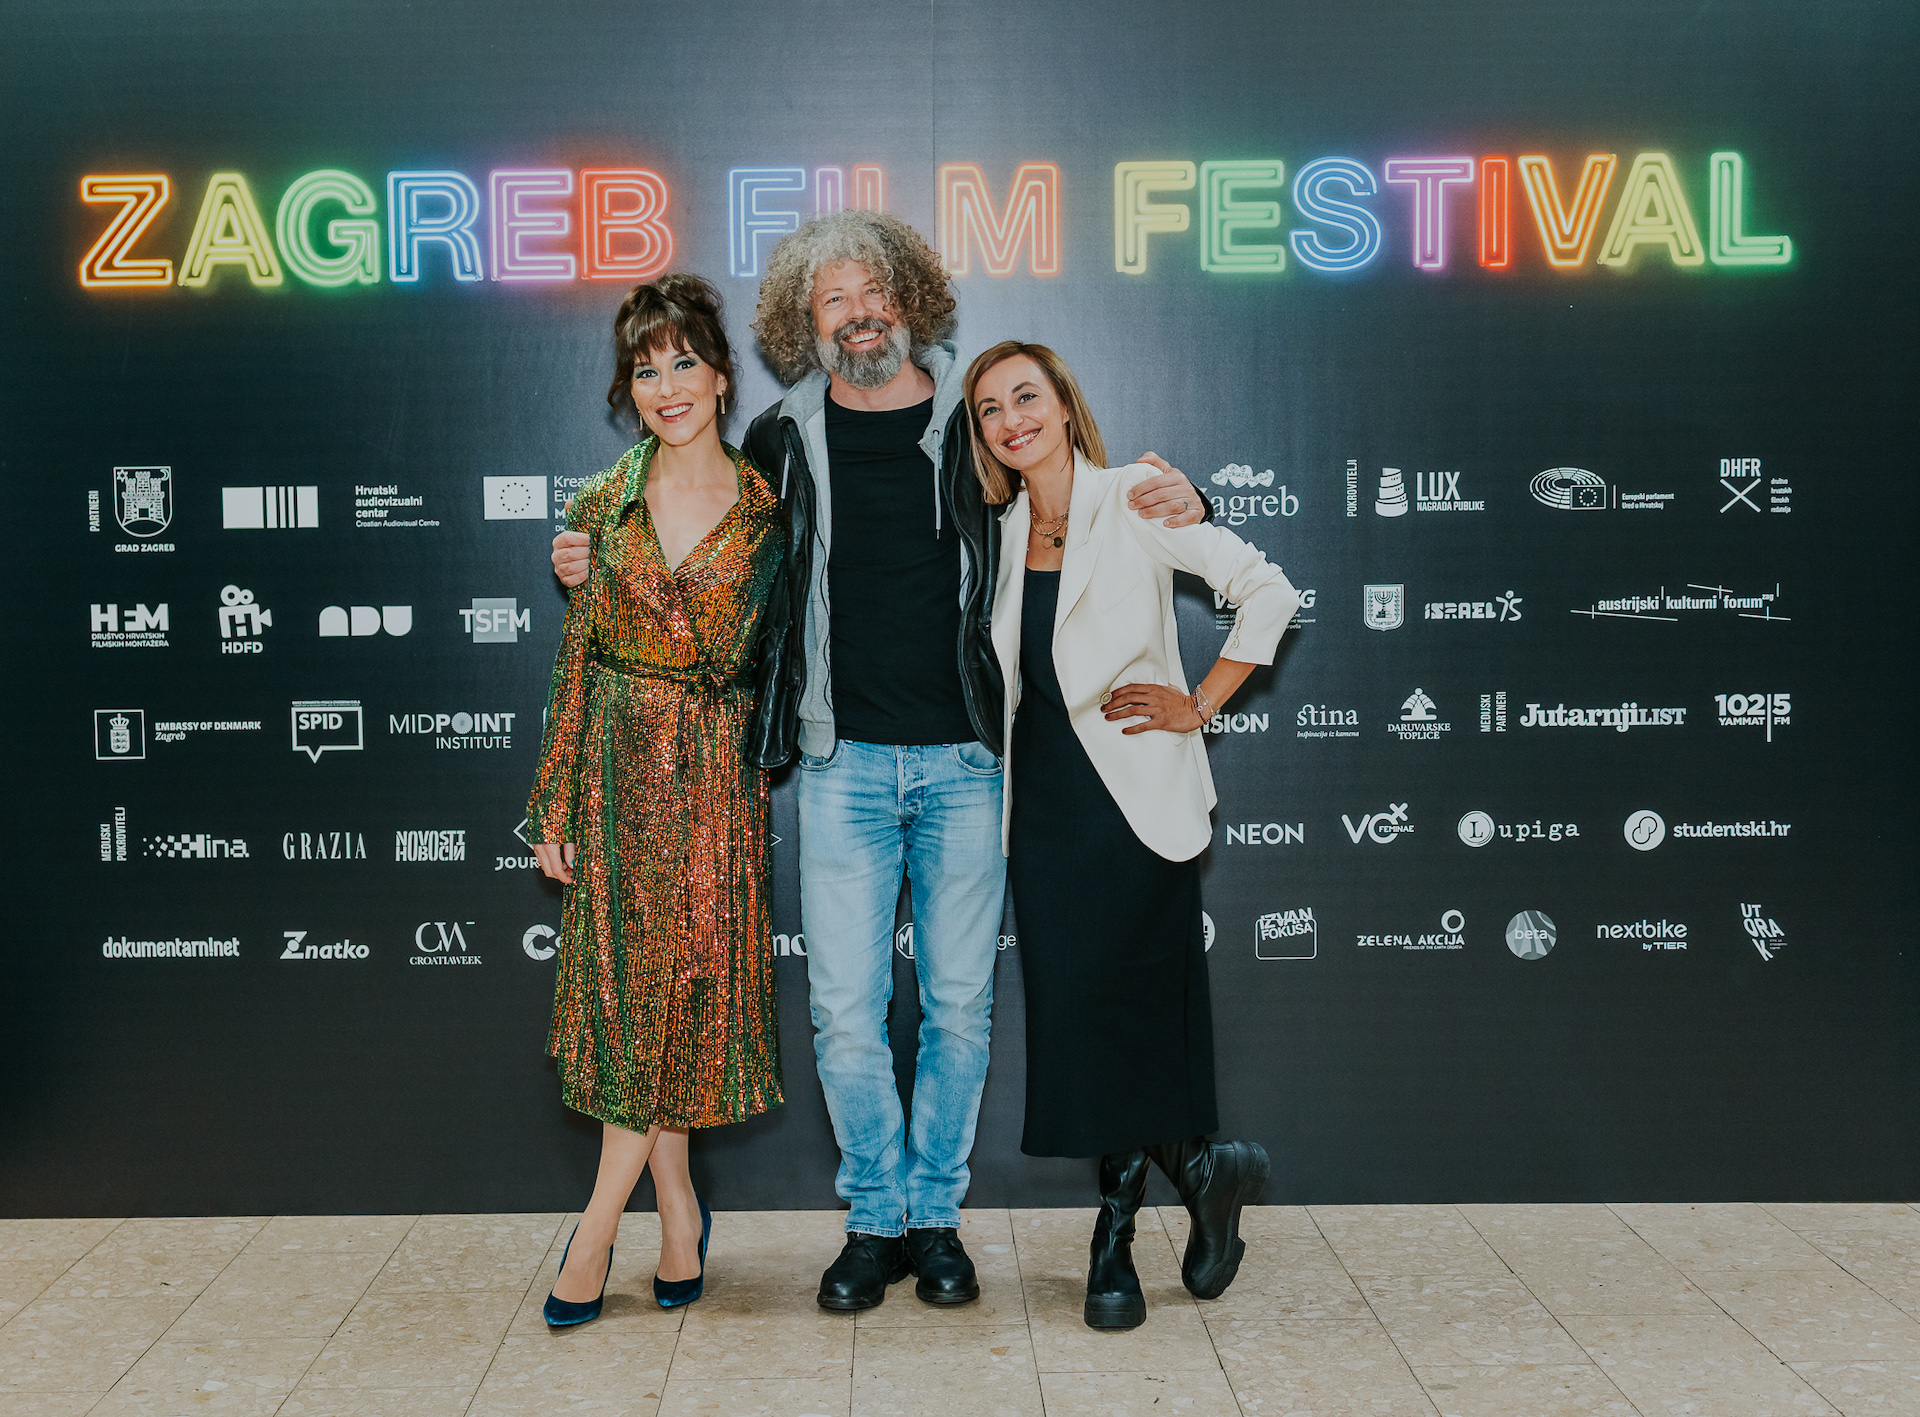 "Seventh Heaven" opens the 21st Zagreb Film Festival